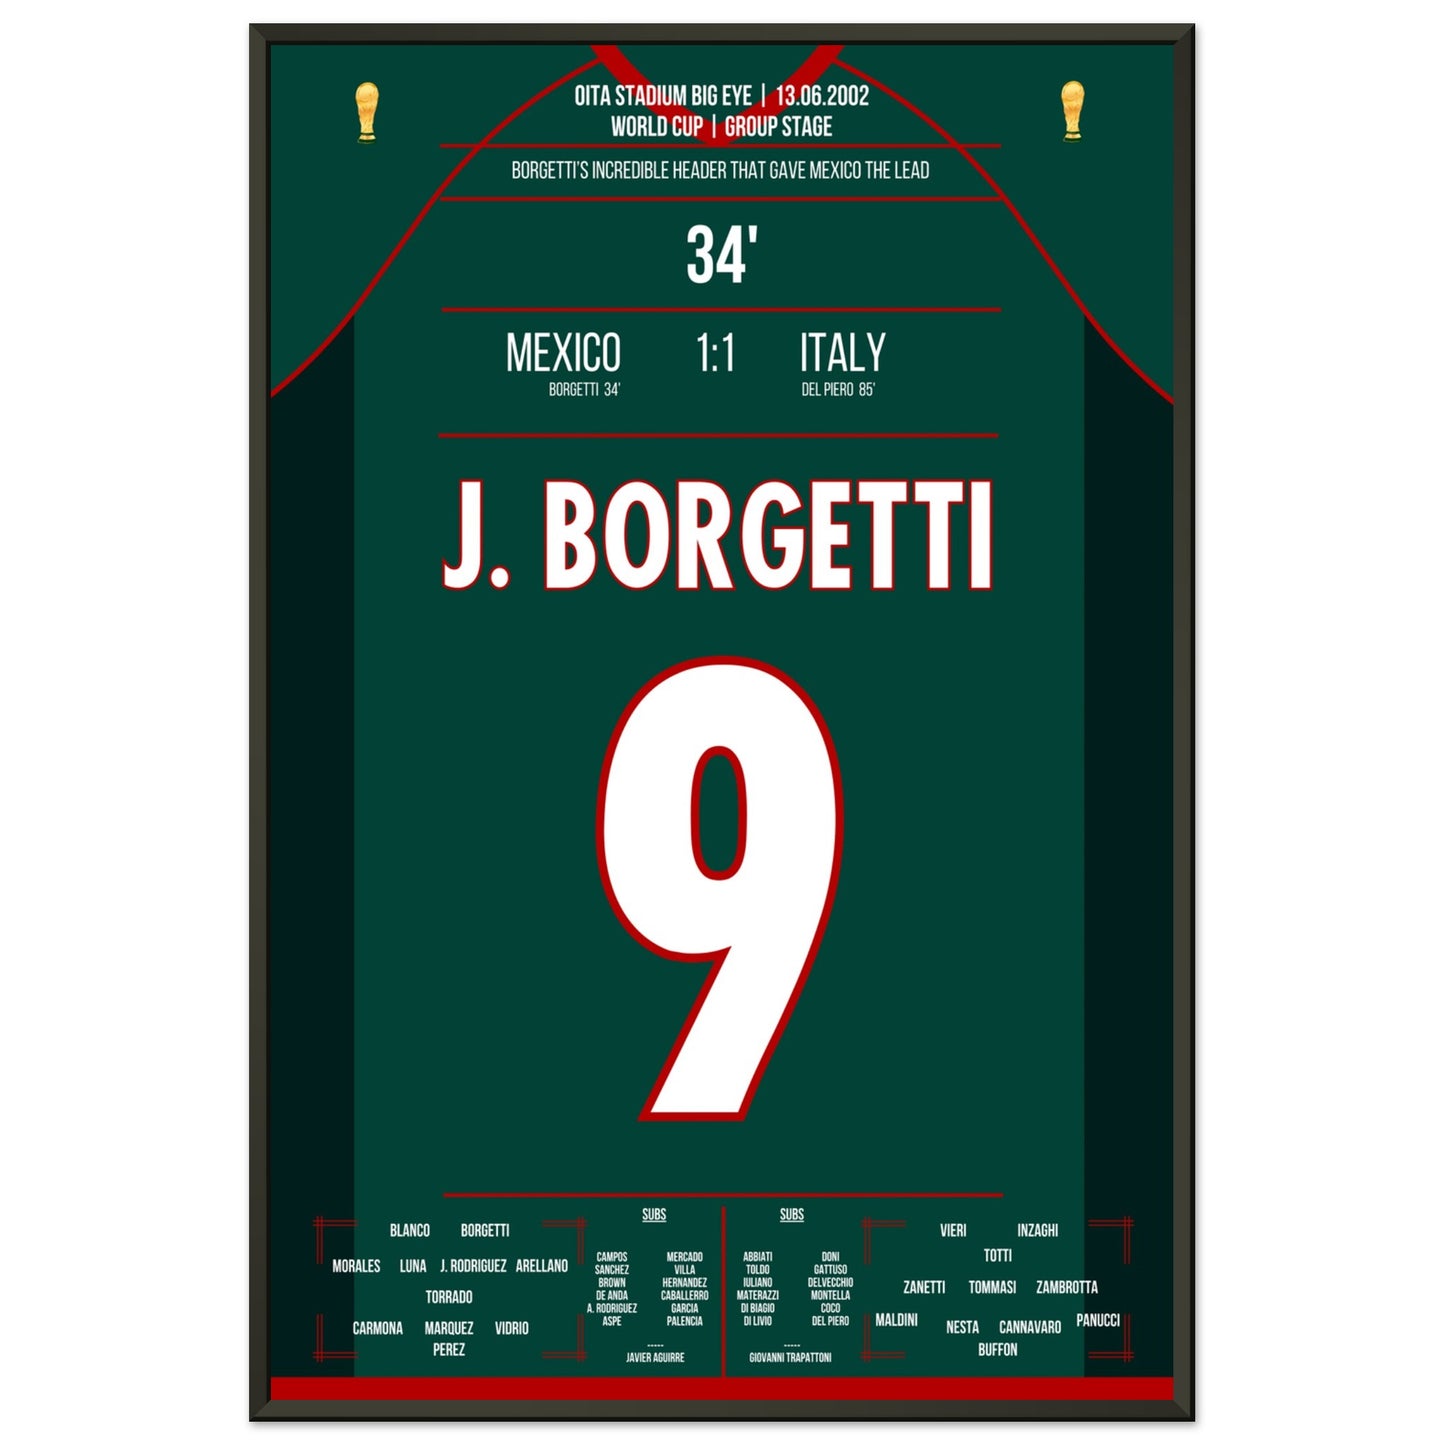 Borgetti's sensationelles Kopfballtor gegen Buffon bei der WM 2002